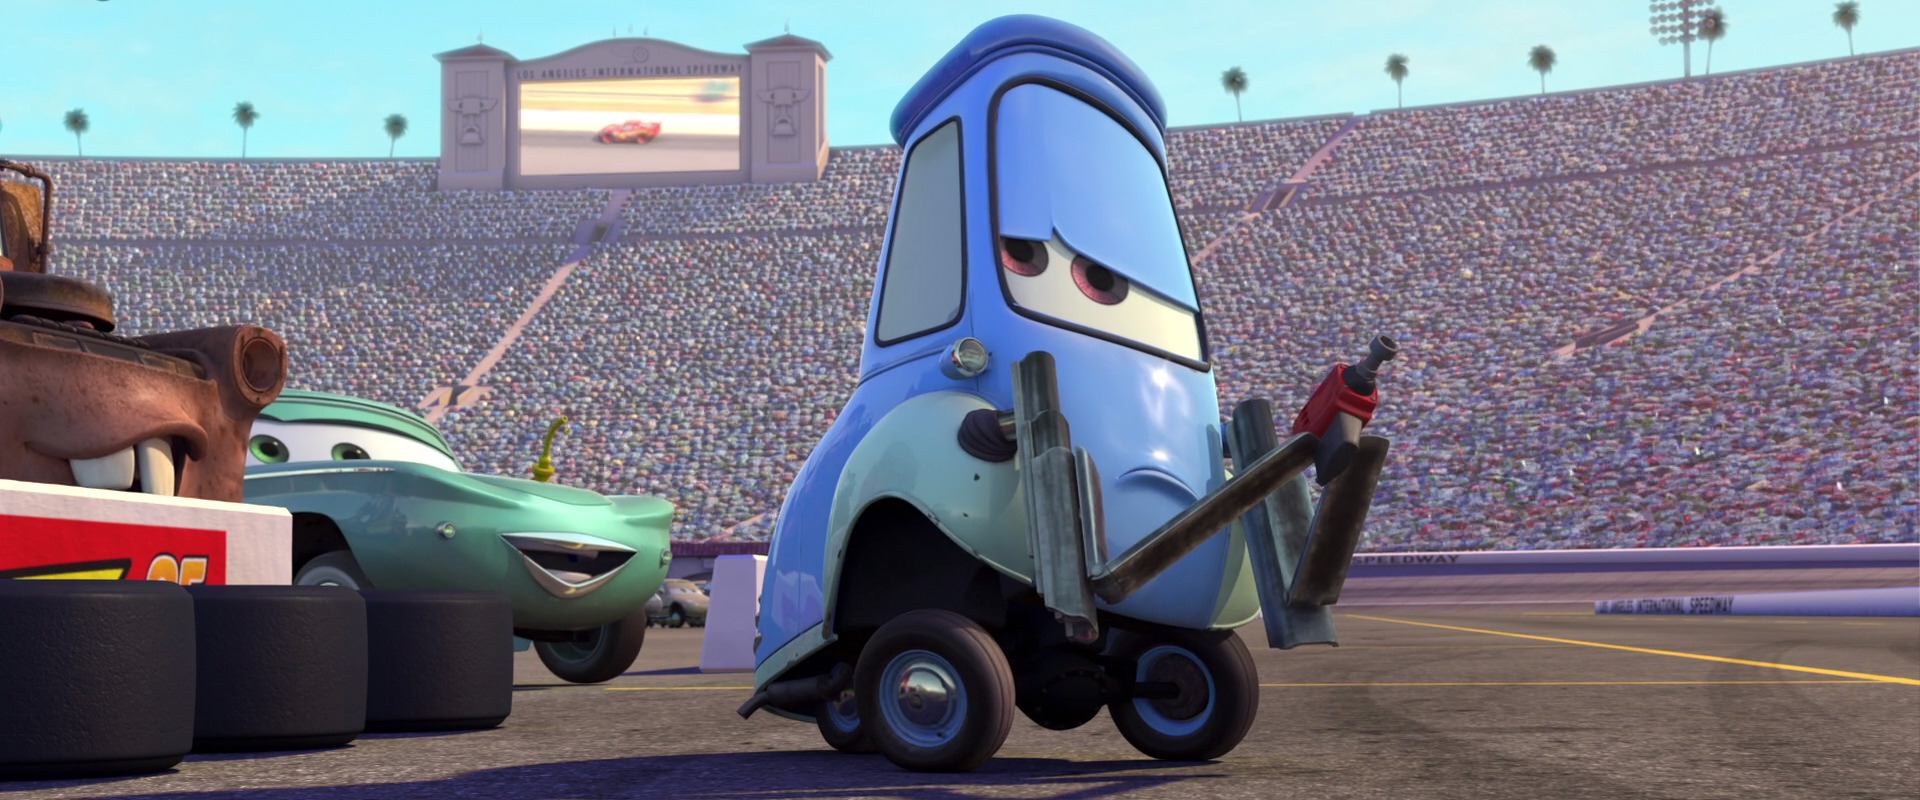 Lot - Disney Pixar The World of Cars Race O Rama Pit Crew Member Guido